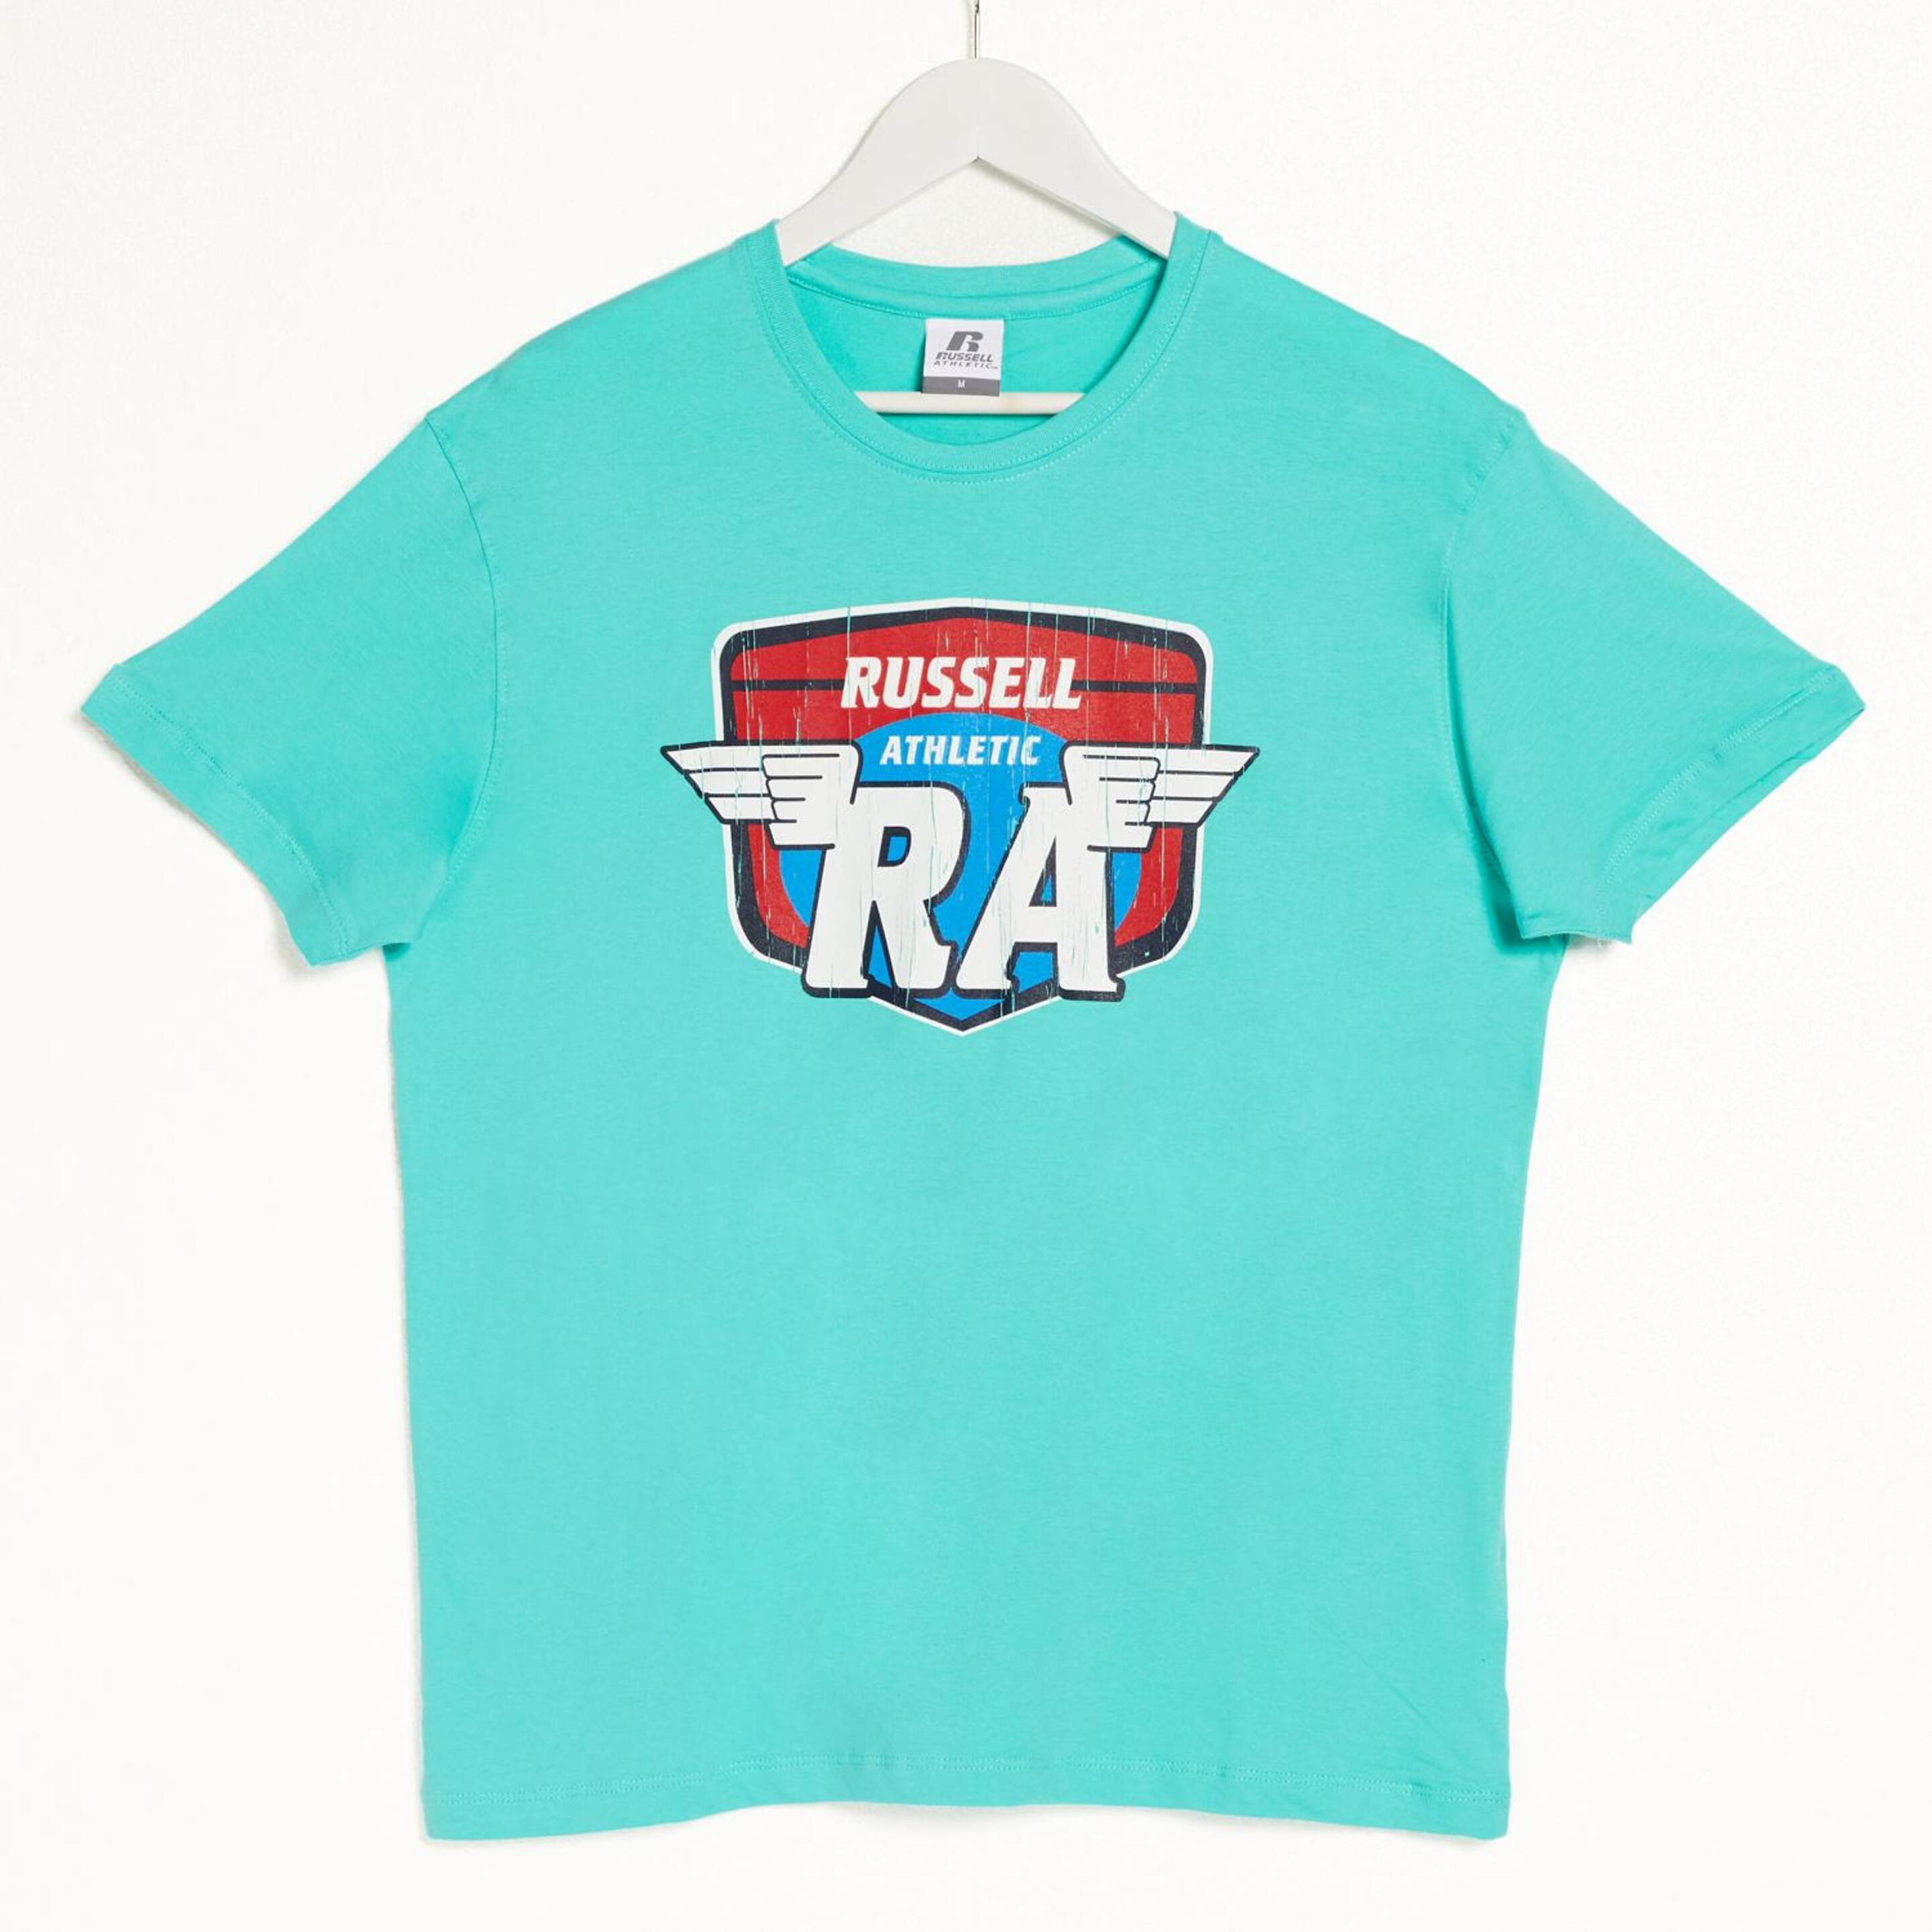 Russell Athletic - Verde - Camiseta Manga Corta Hombre